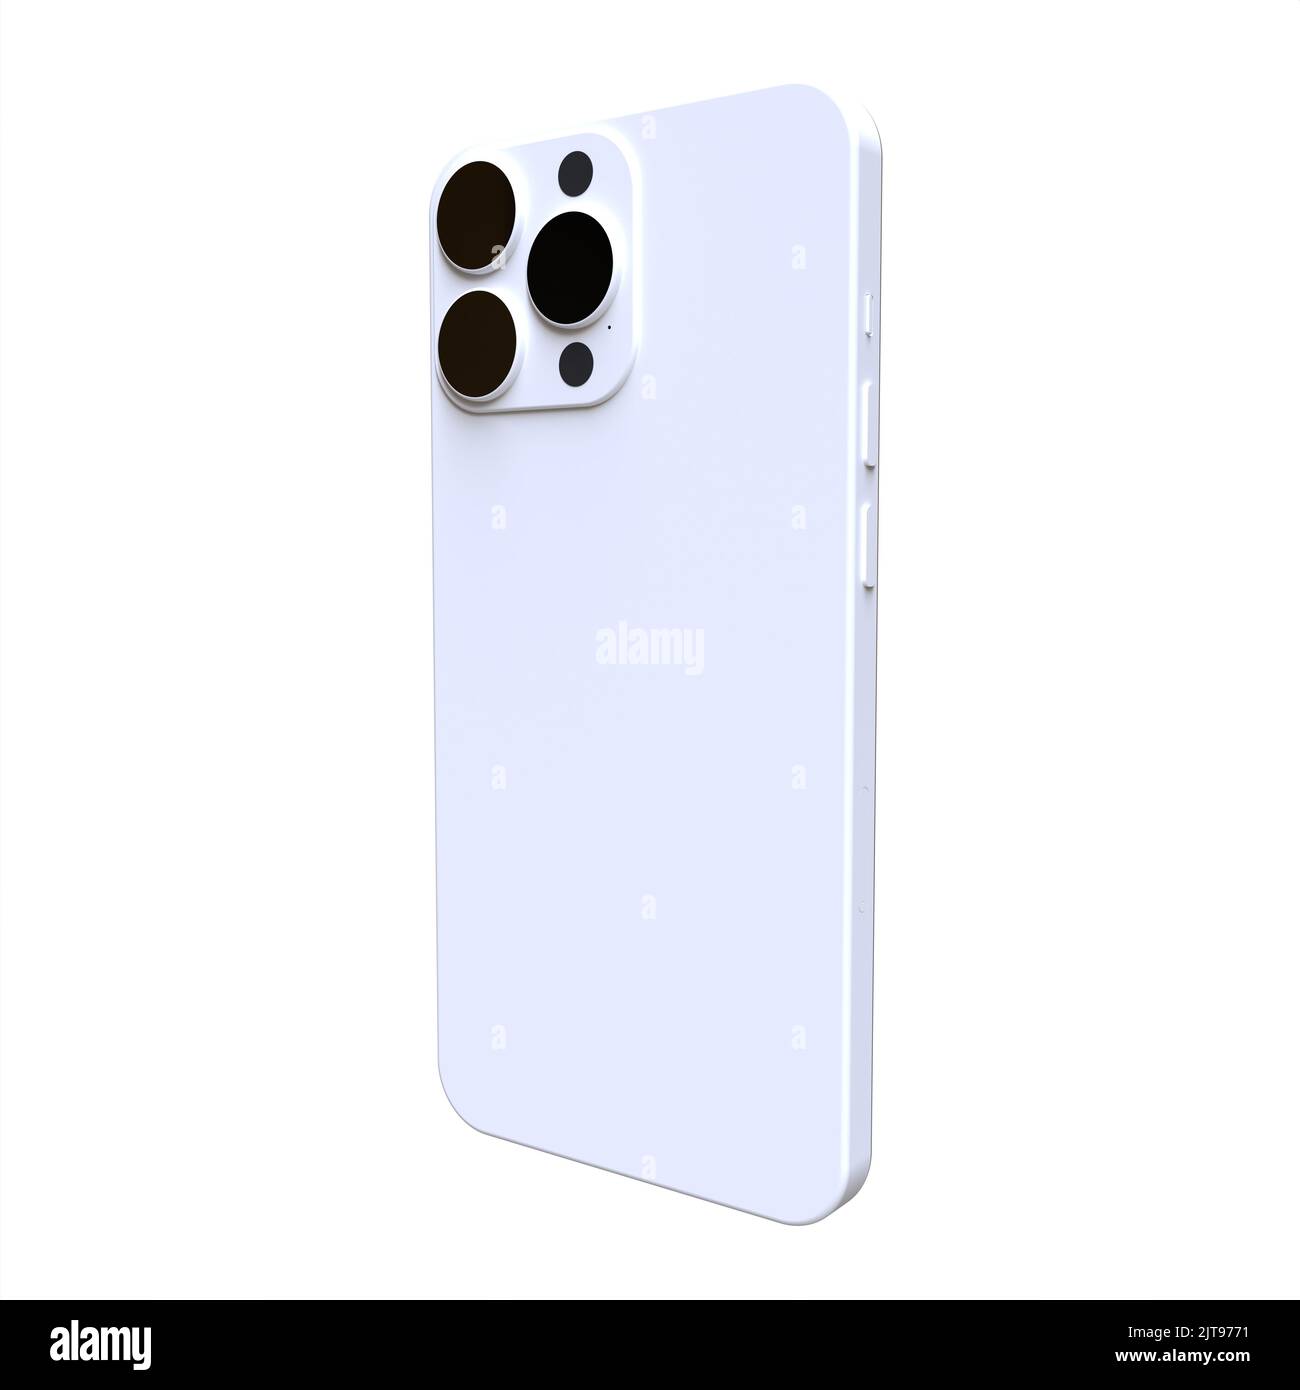 Smartphone isolated on white background Stock Photo